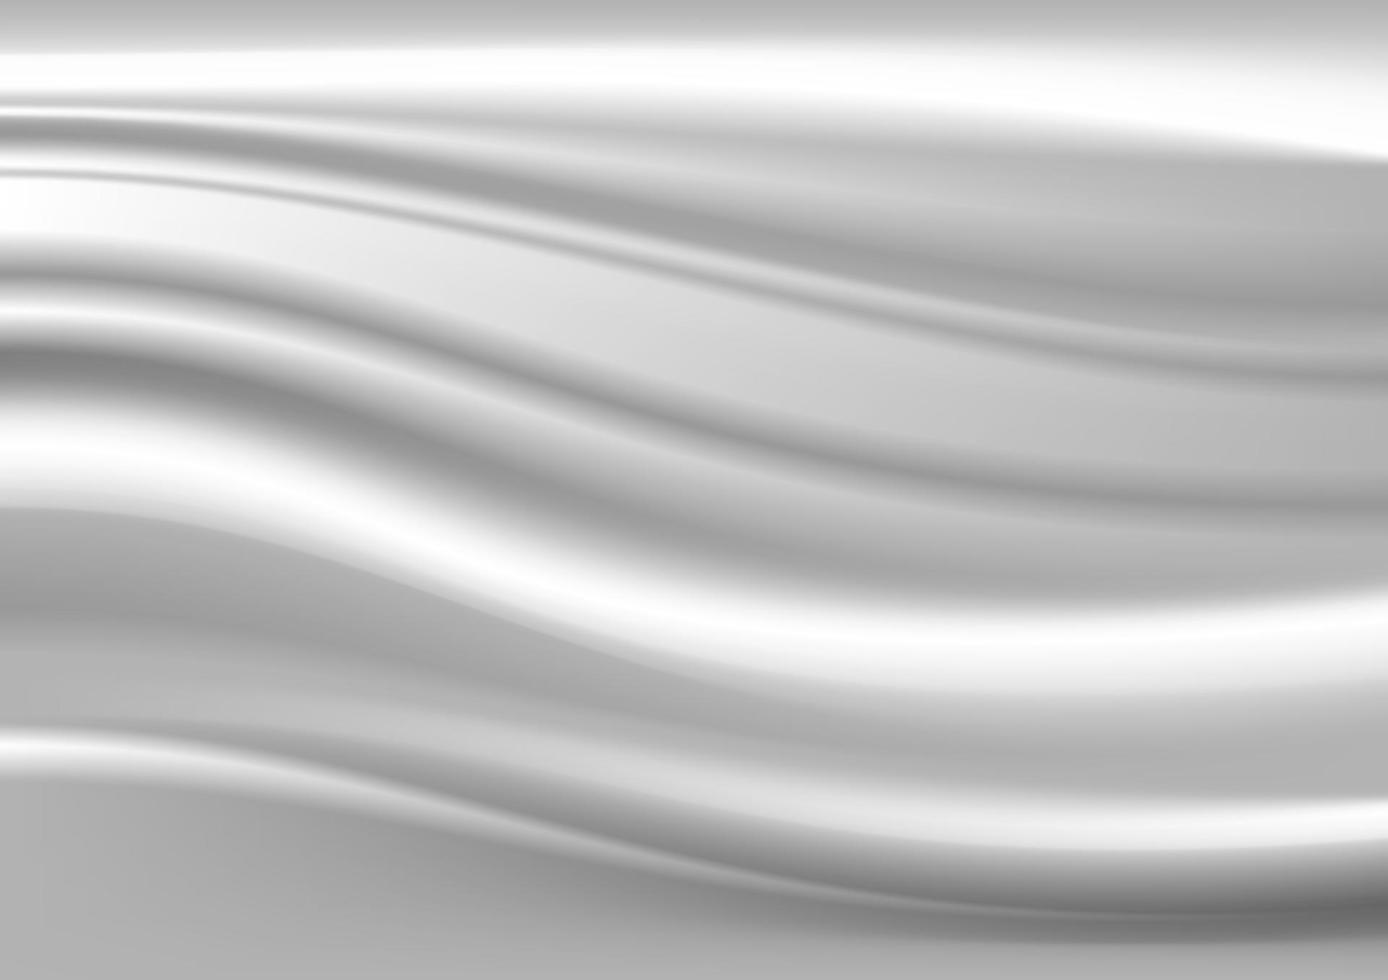 abstrakt bakgrund grå och vit ton tapeter grafisk design vektorillustration vektor